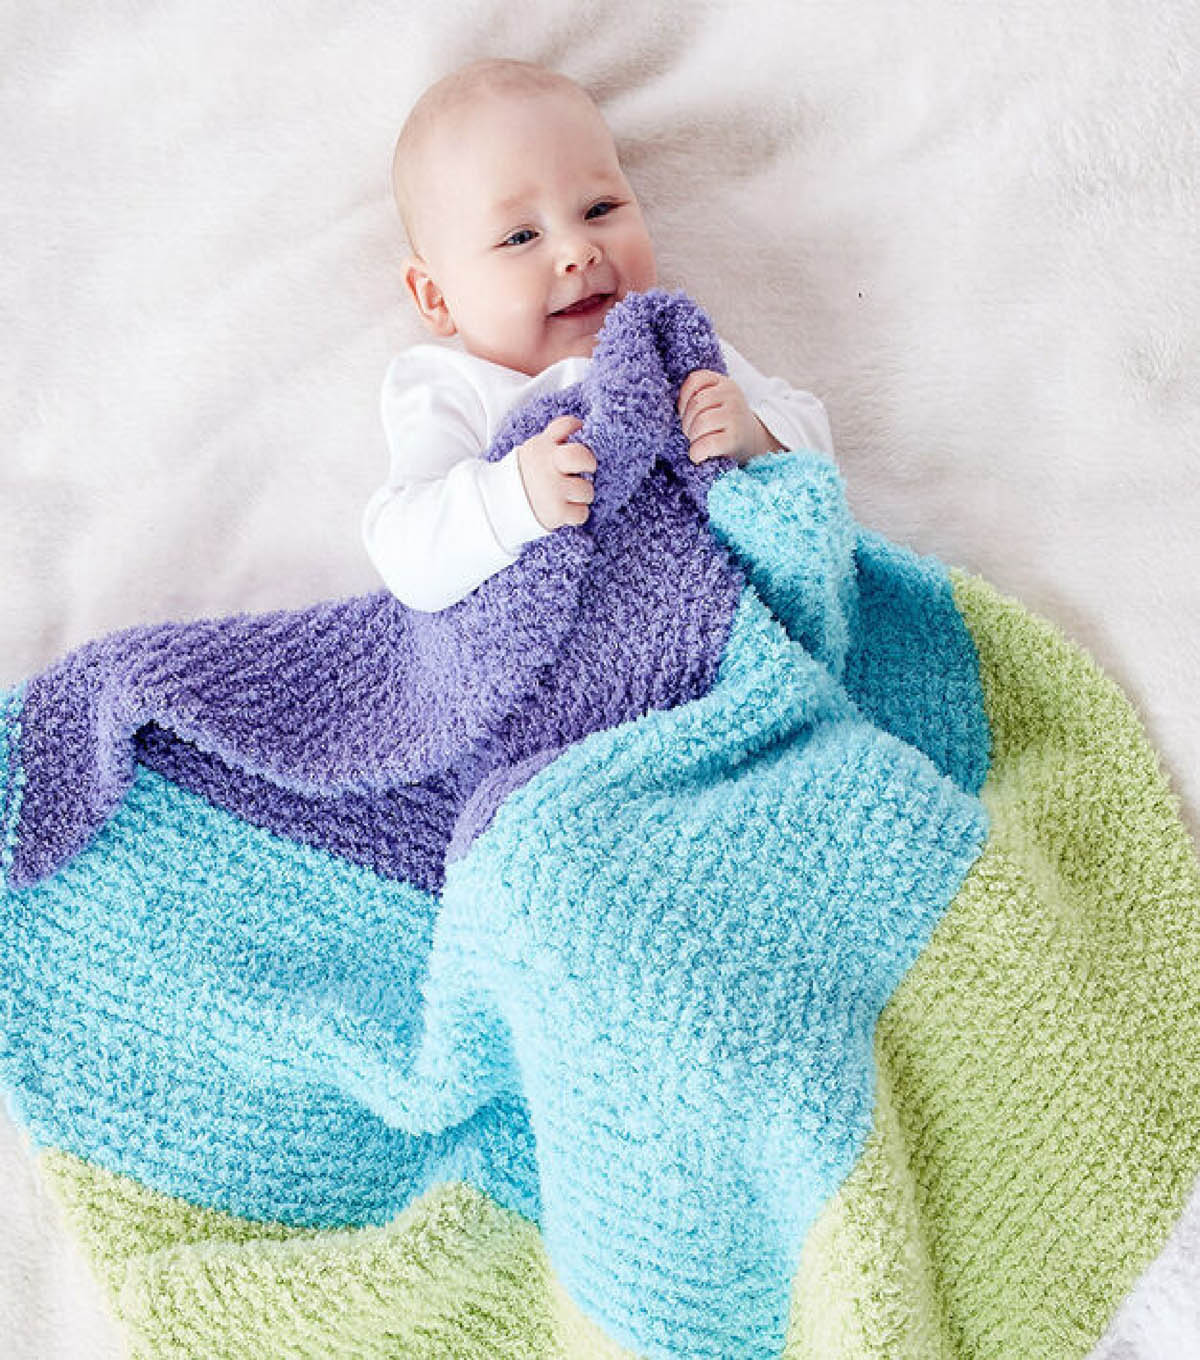 How To Make A Bernat Baby Chevron Knit Blanket | JOANN